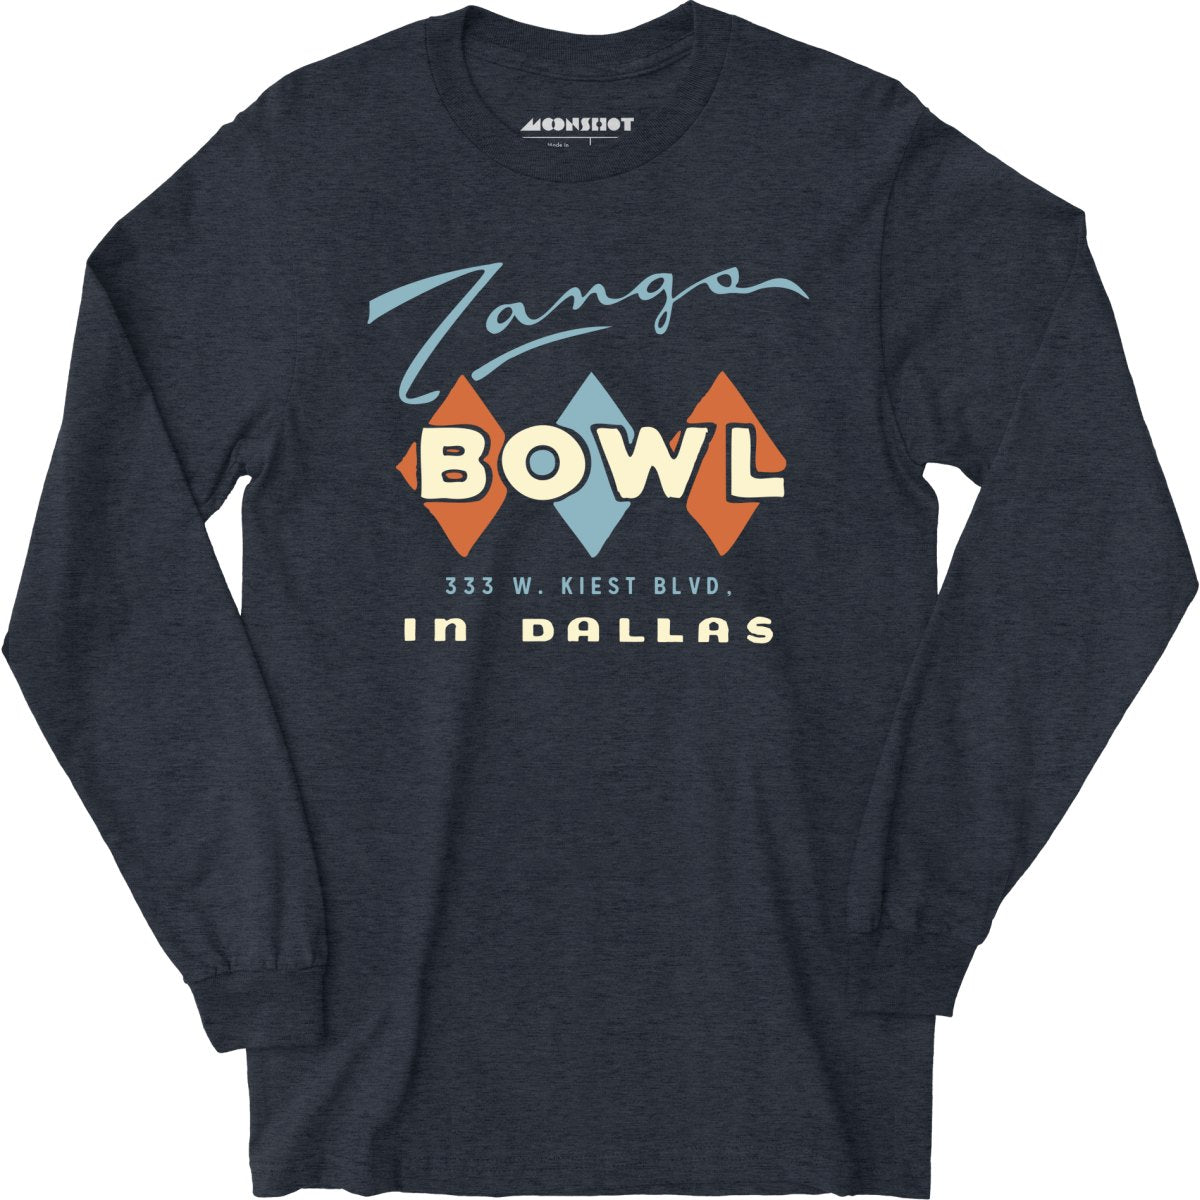 Zangs Bowl - Dallas, TX - Vintage Bowling Alley - Long Sleeve T-Shirt